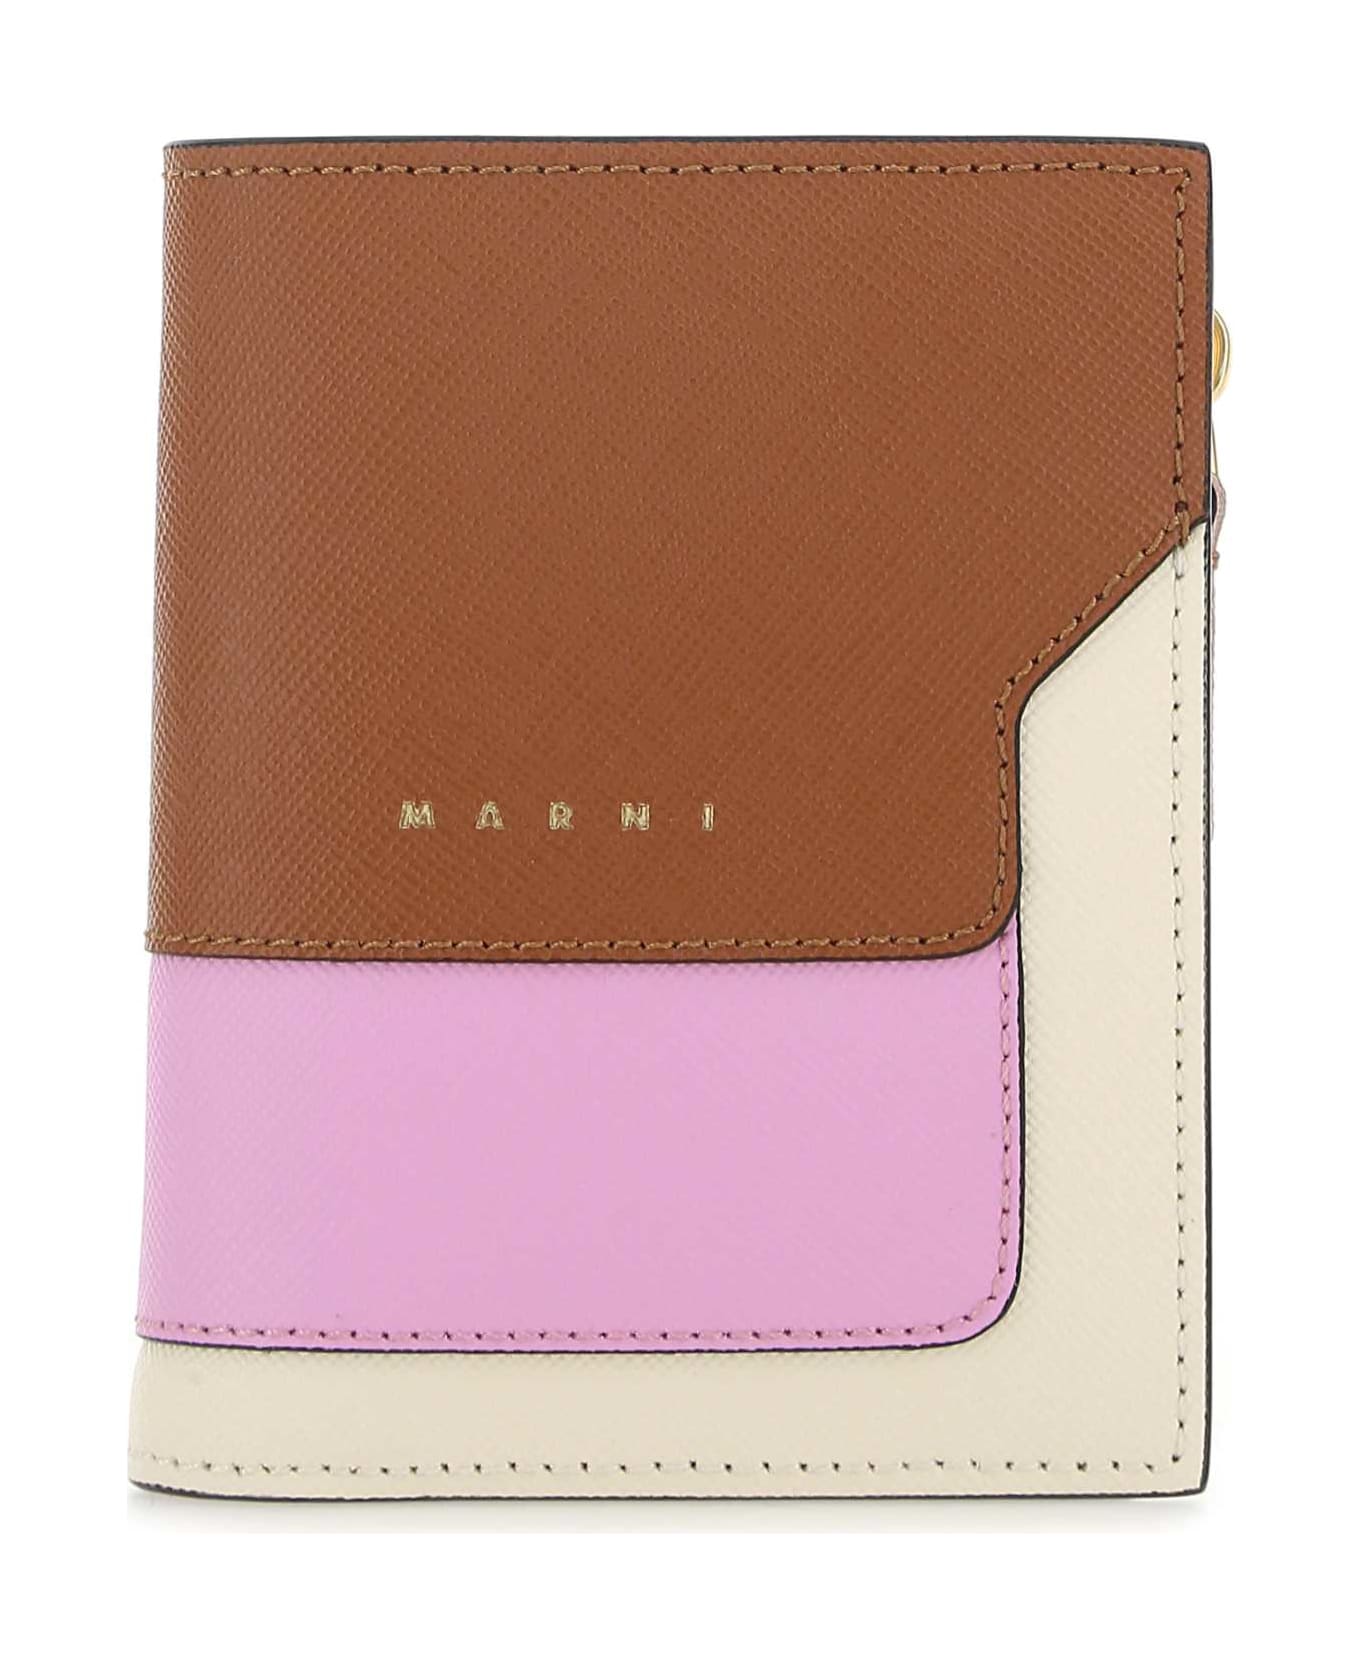 Marni Multicolor Leather Wallet - Z565N